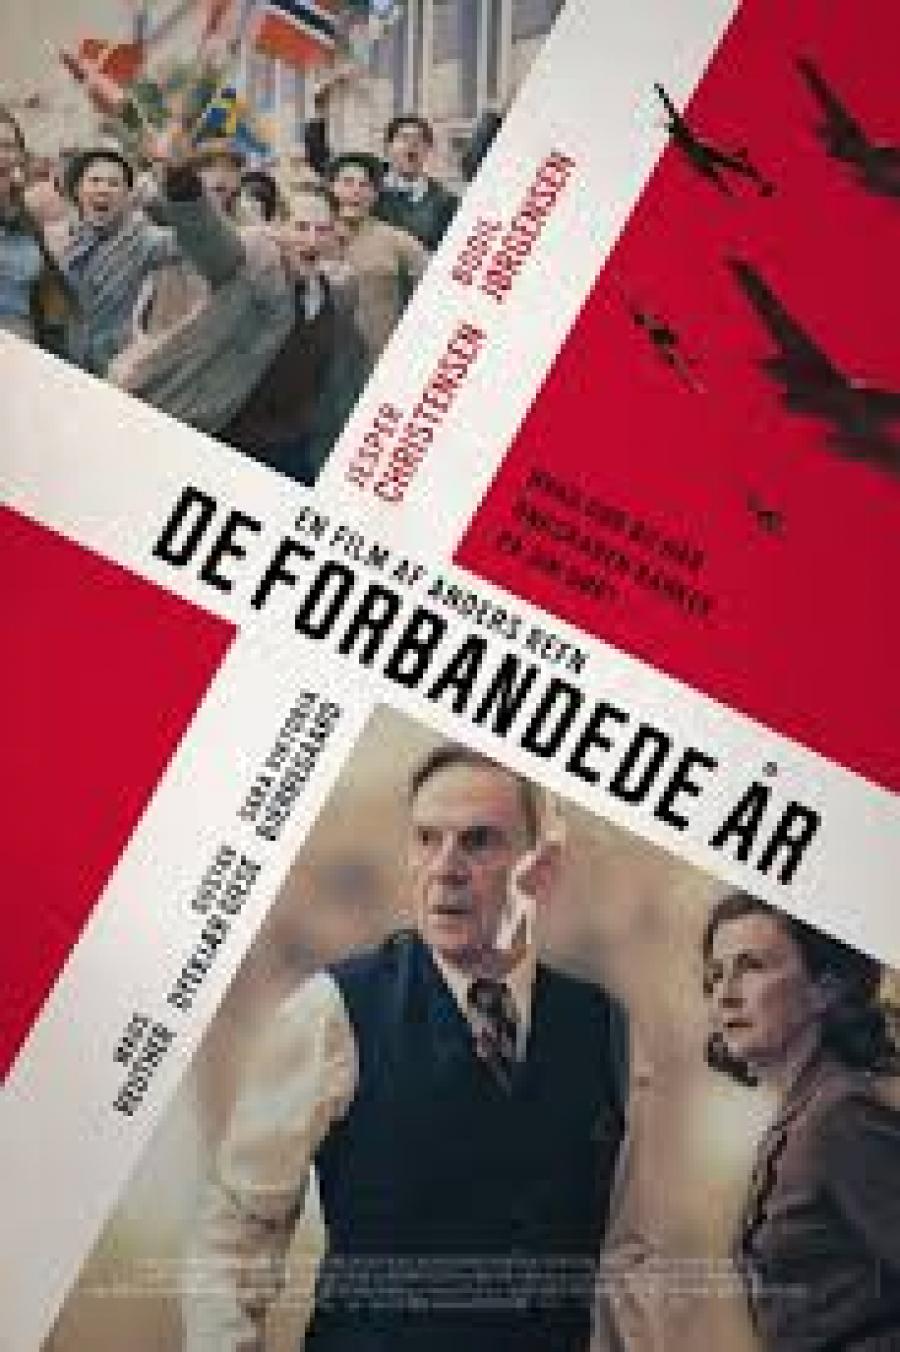 Biografplakat med den danske film De forbandede år